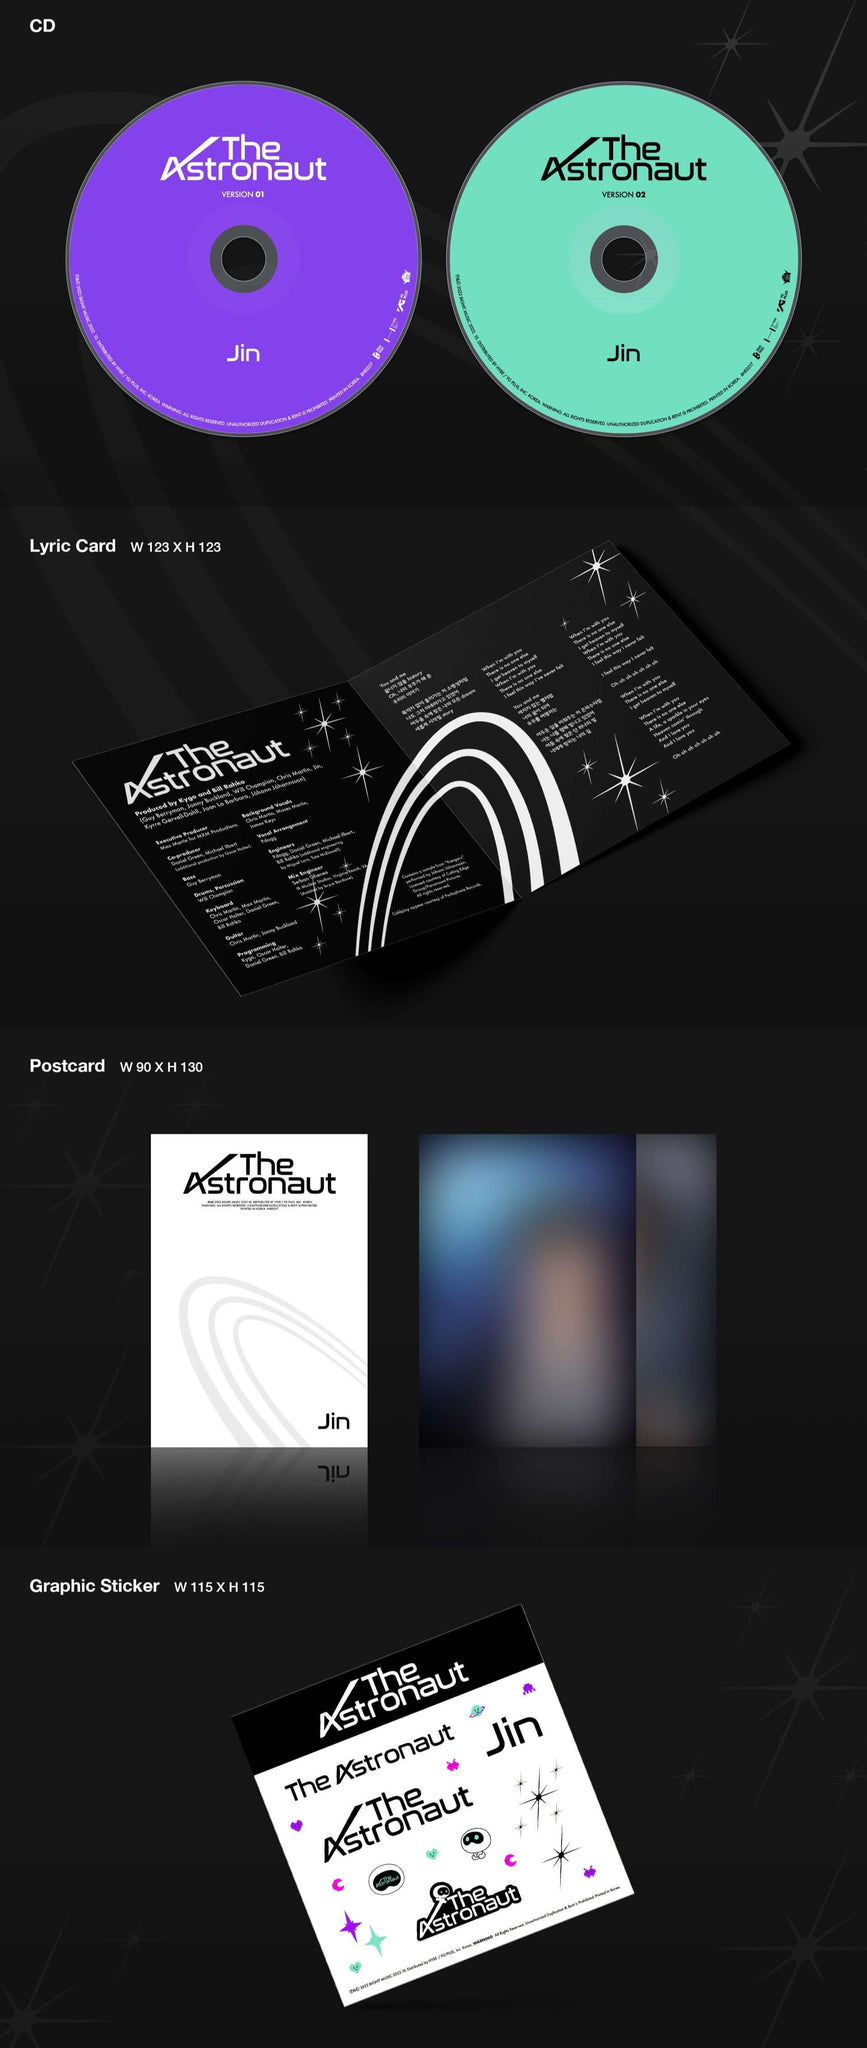 Jin Solo Single Album The Astronaut Inclusions CD Lyric Card Postcard Graphic Sticker